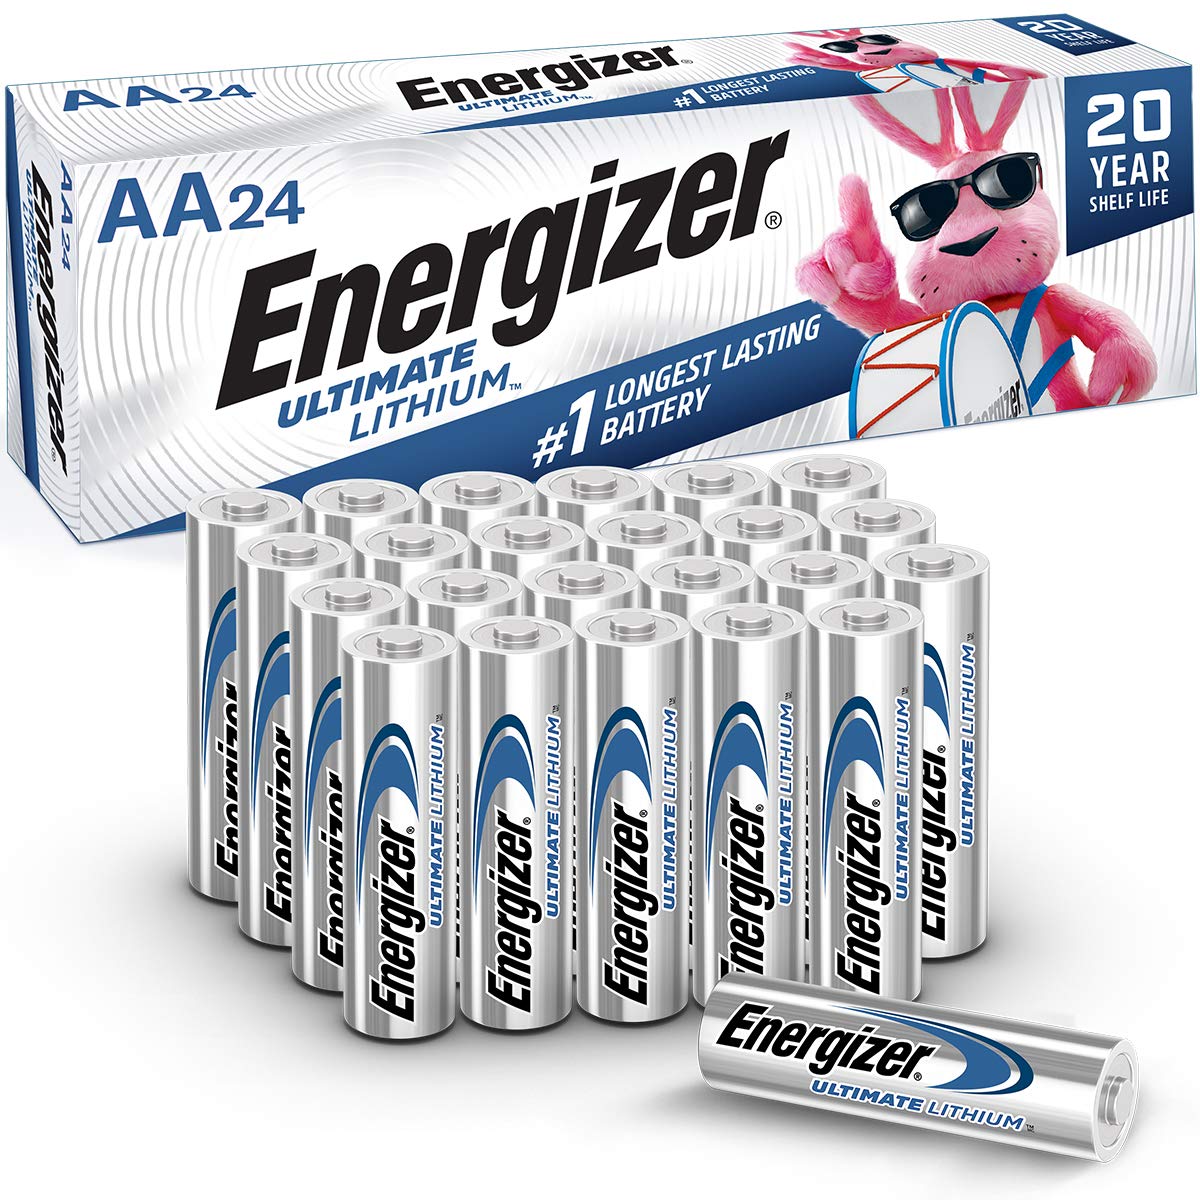 Energizer AA Lithium Batteries Longest Lasting